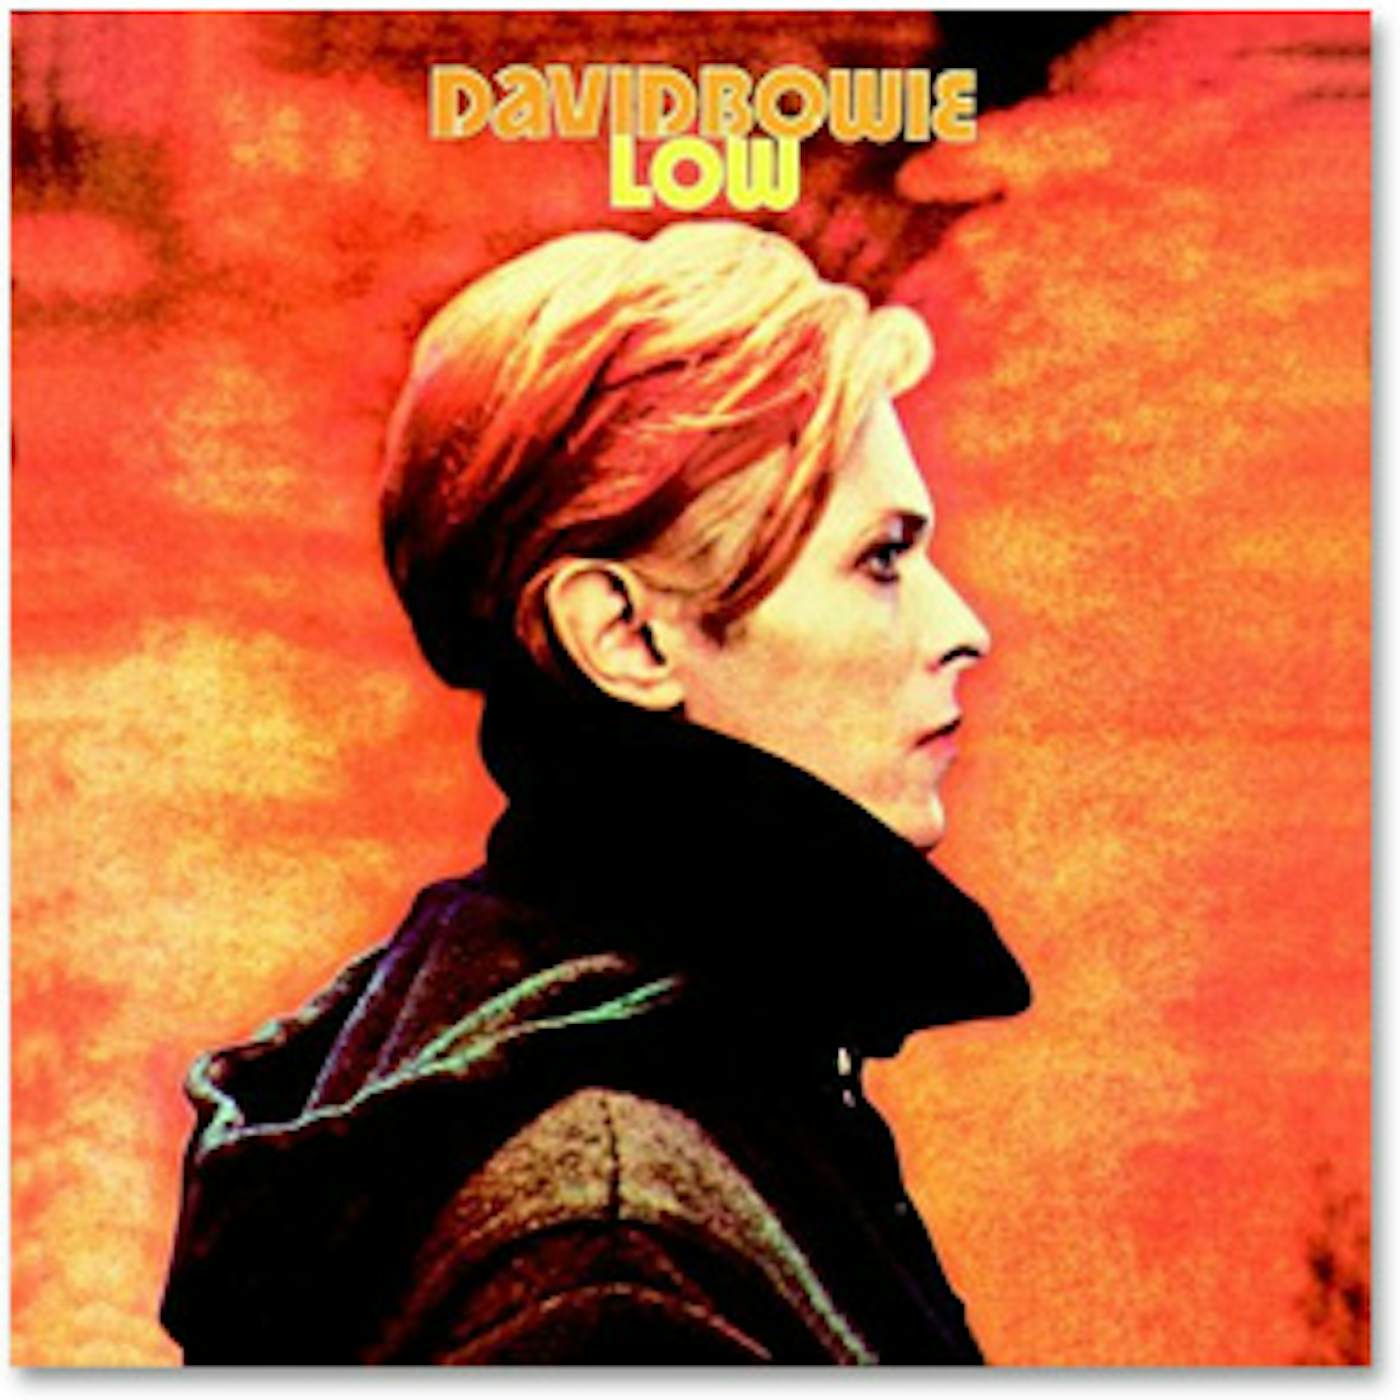 David Bowie Low CD (1977)